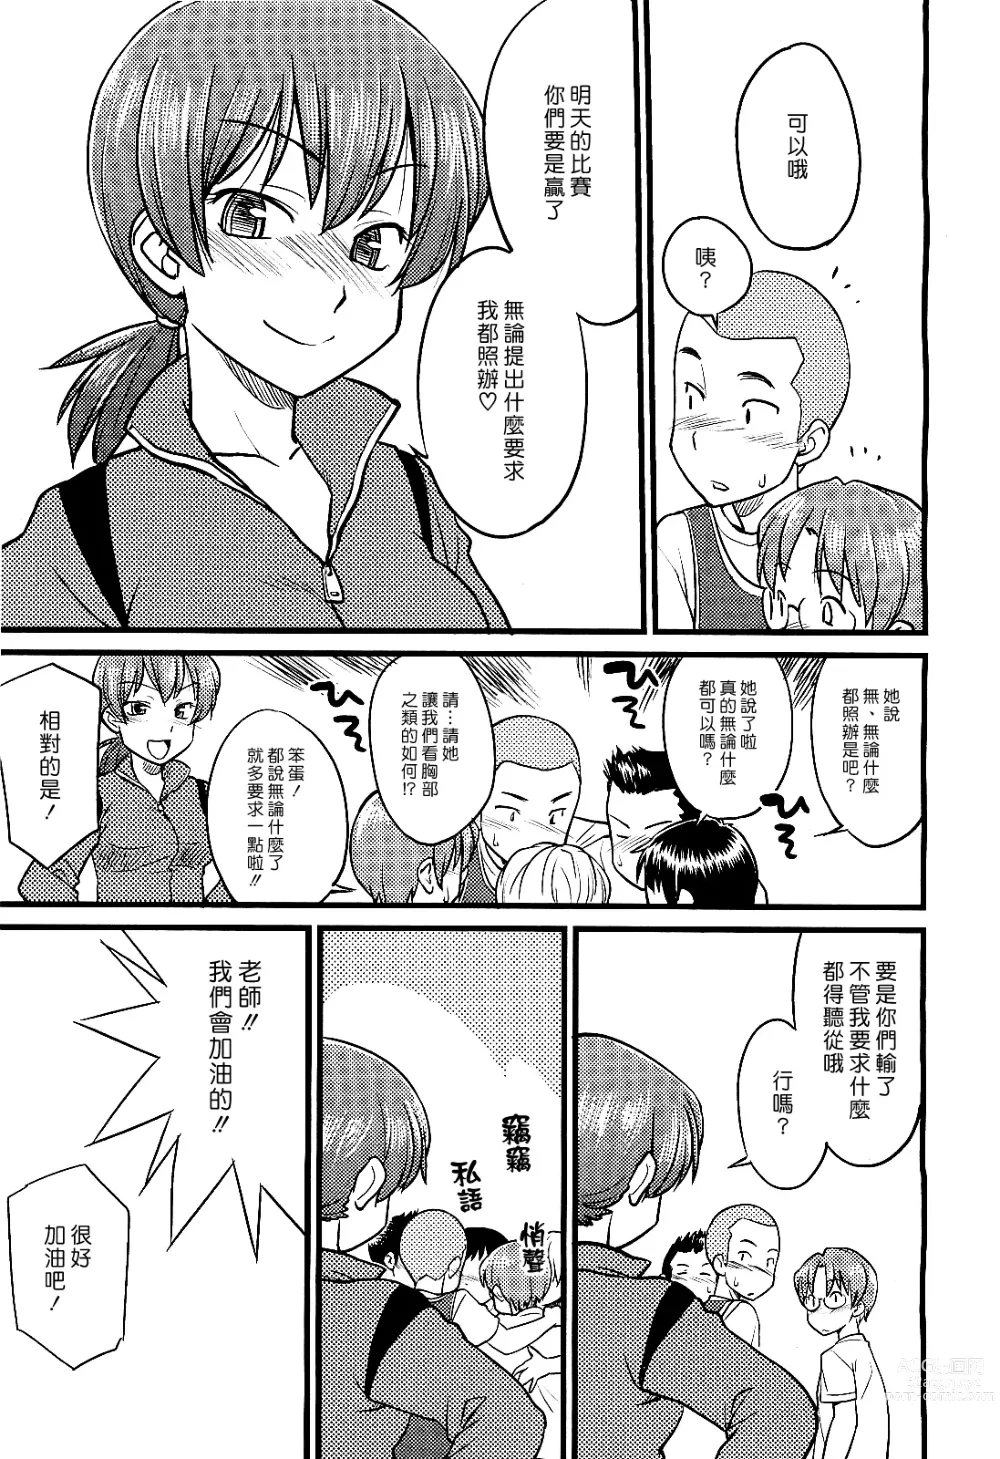 Page 3 of manga 以多打少